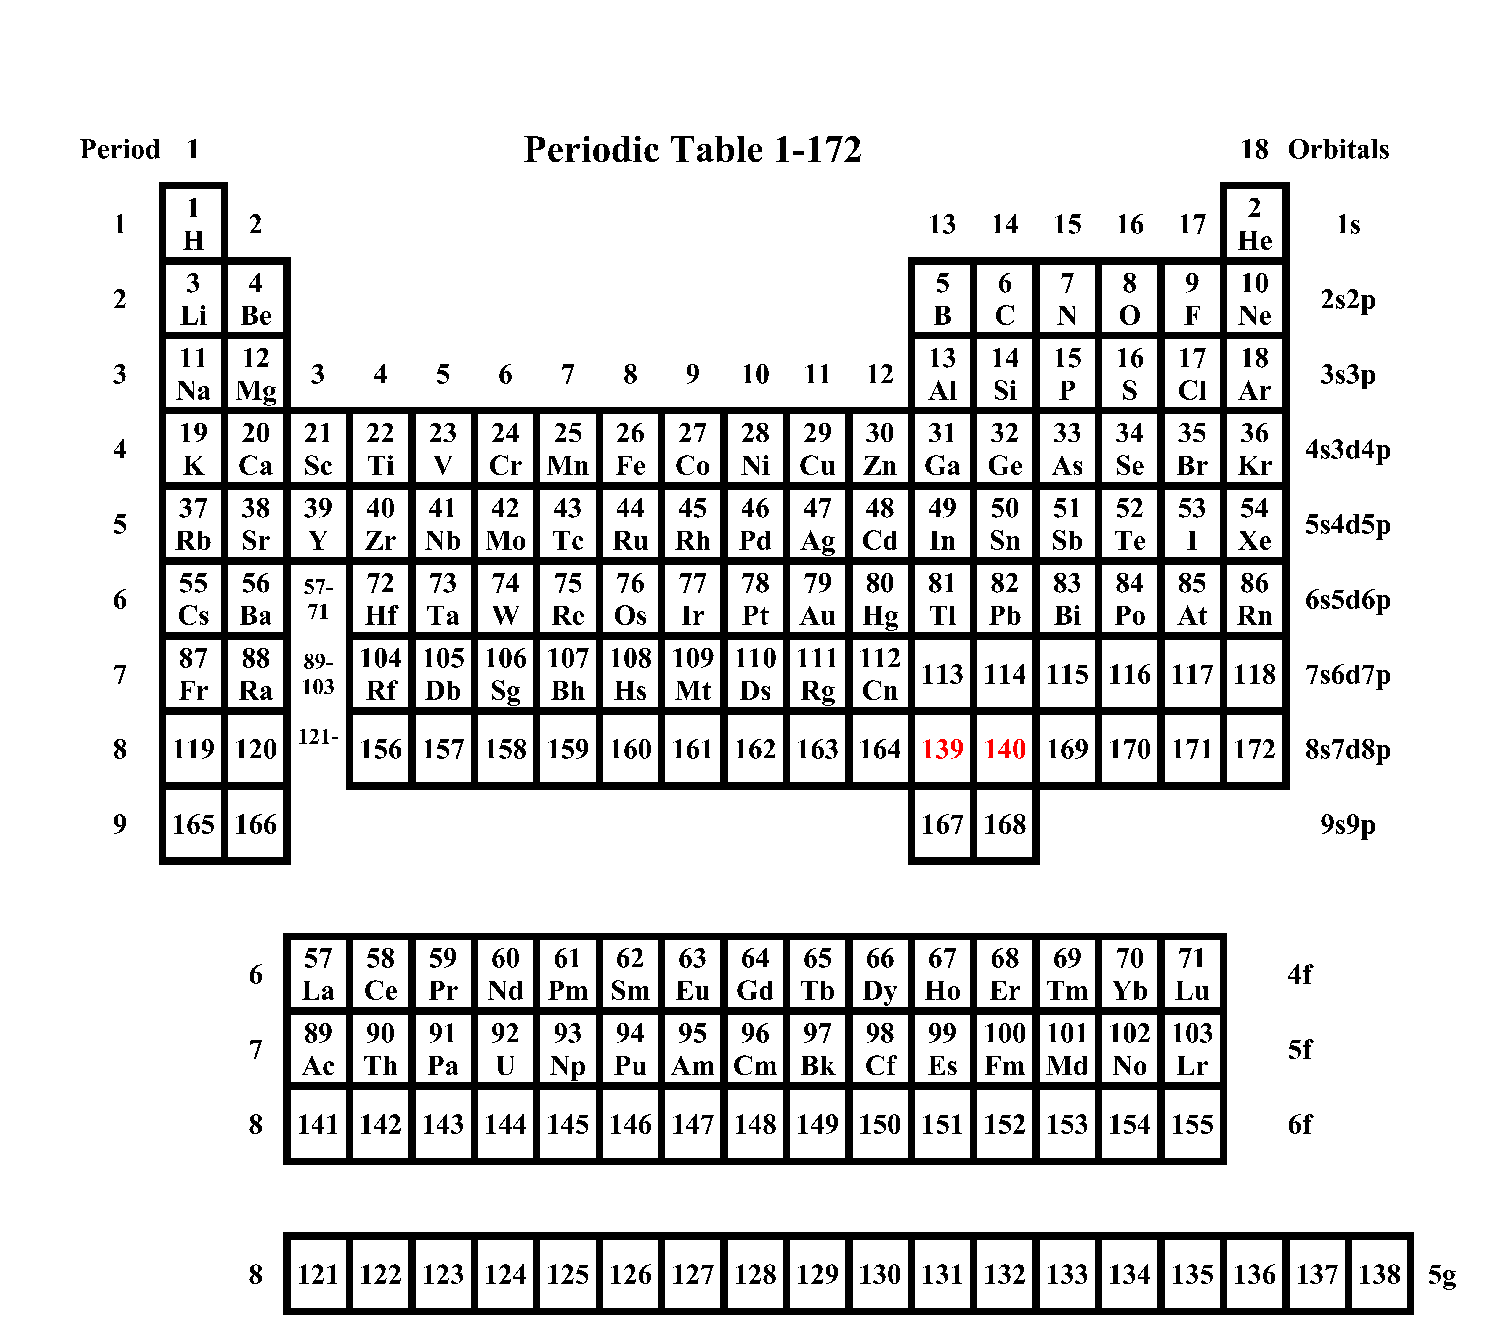 Pyykko's Extended Periodic Table